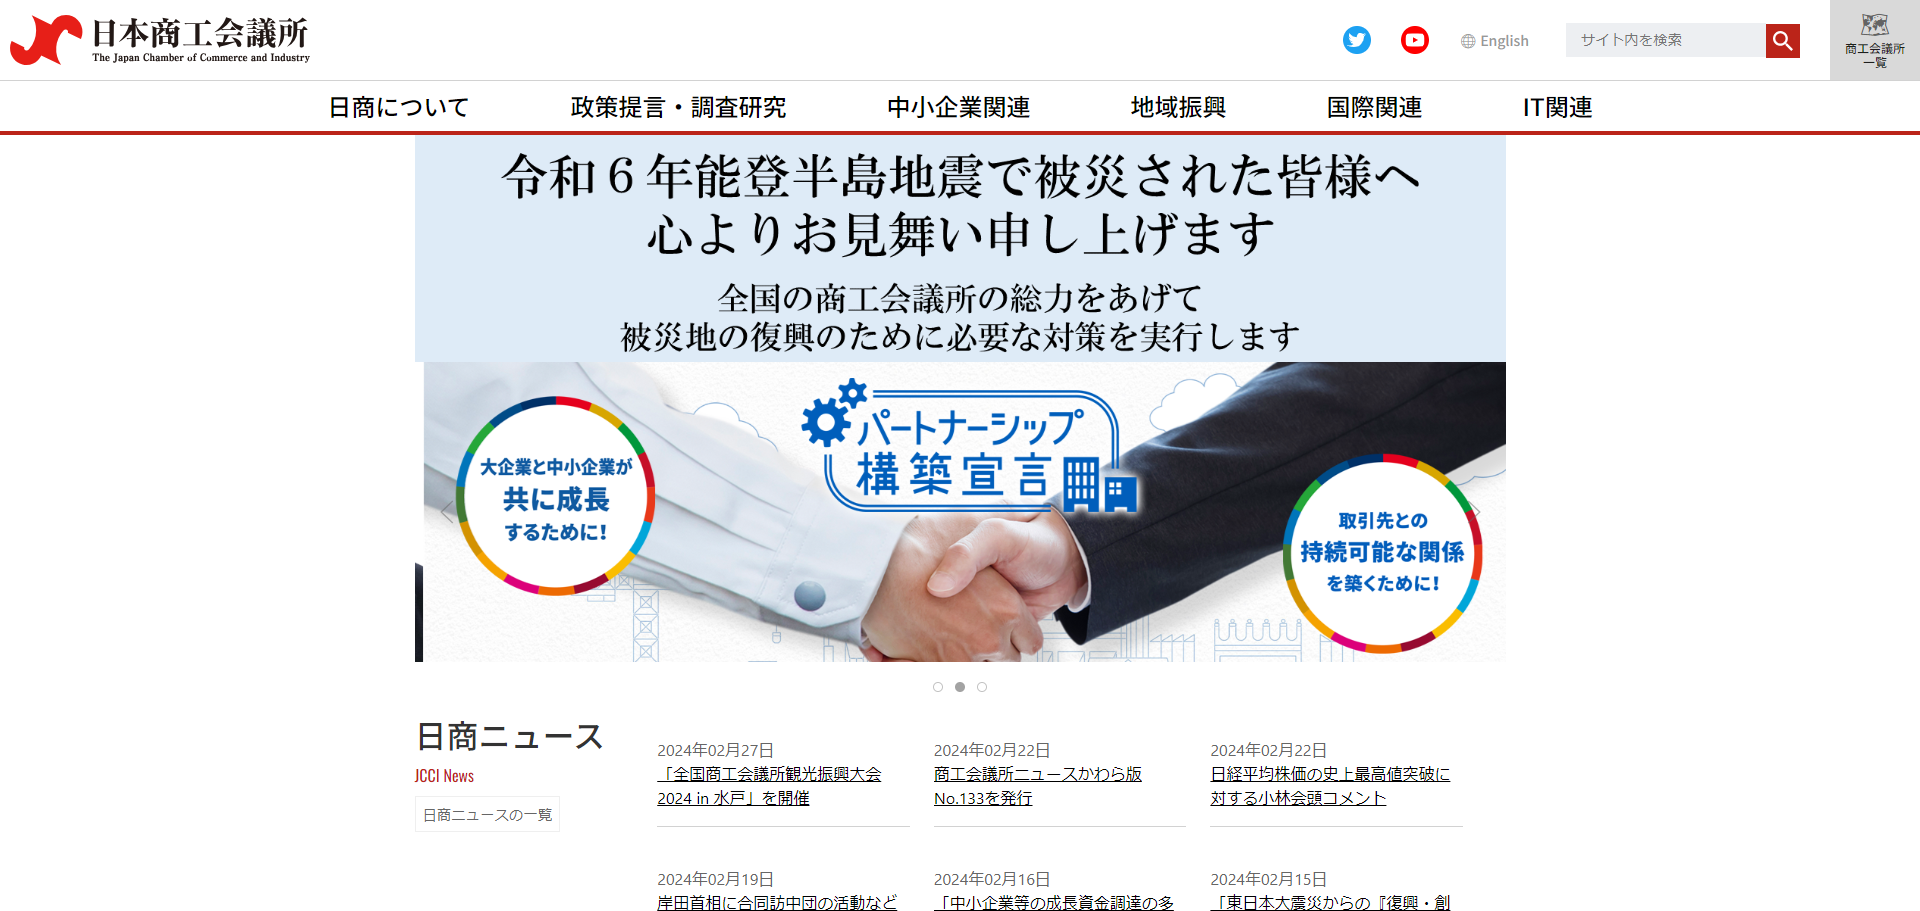 日本商工会議所の越境EC活用事業の支援